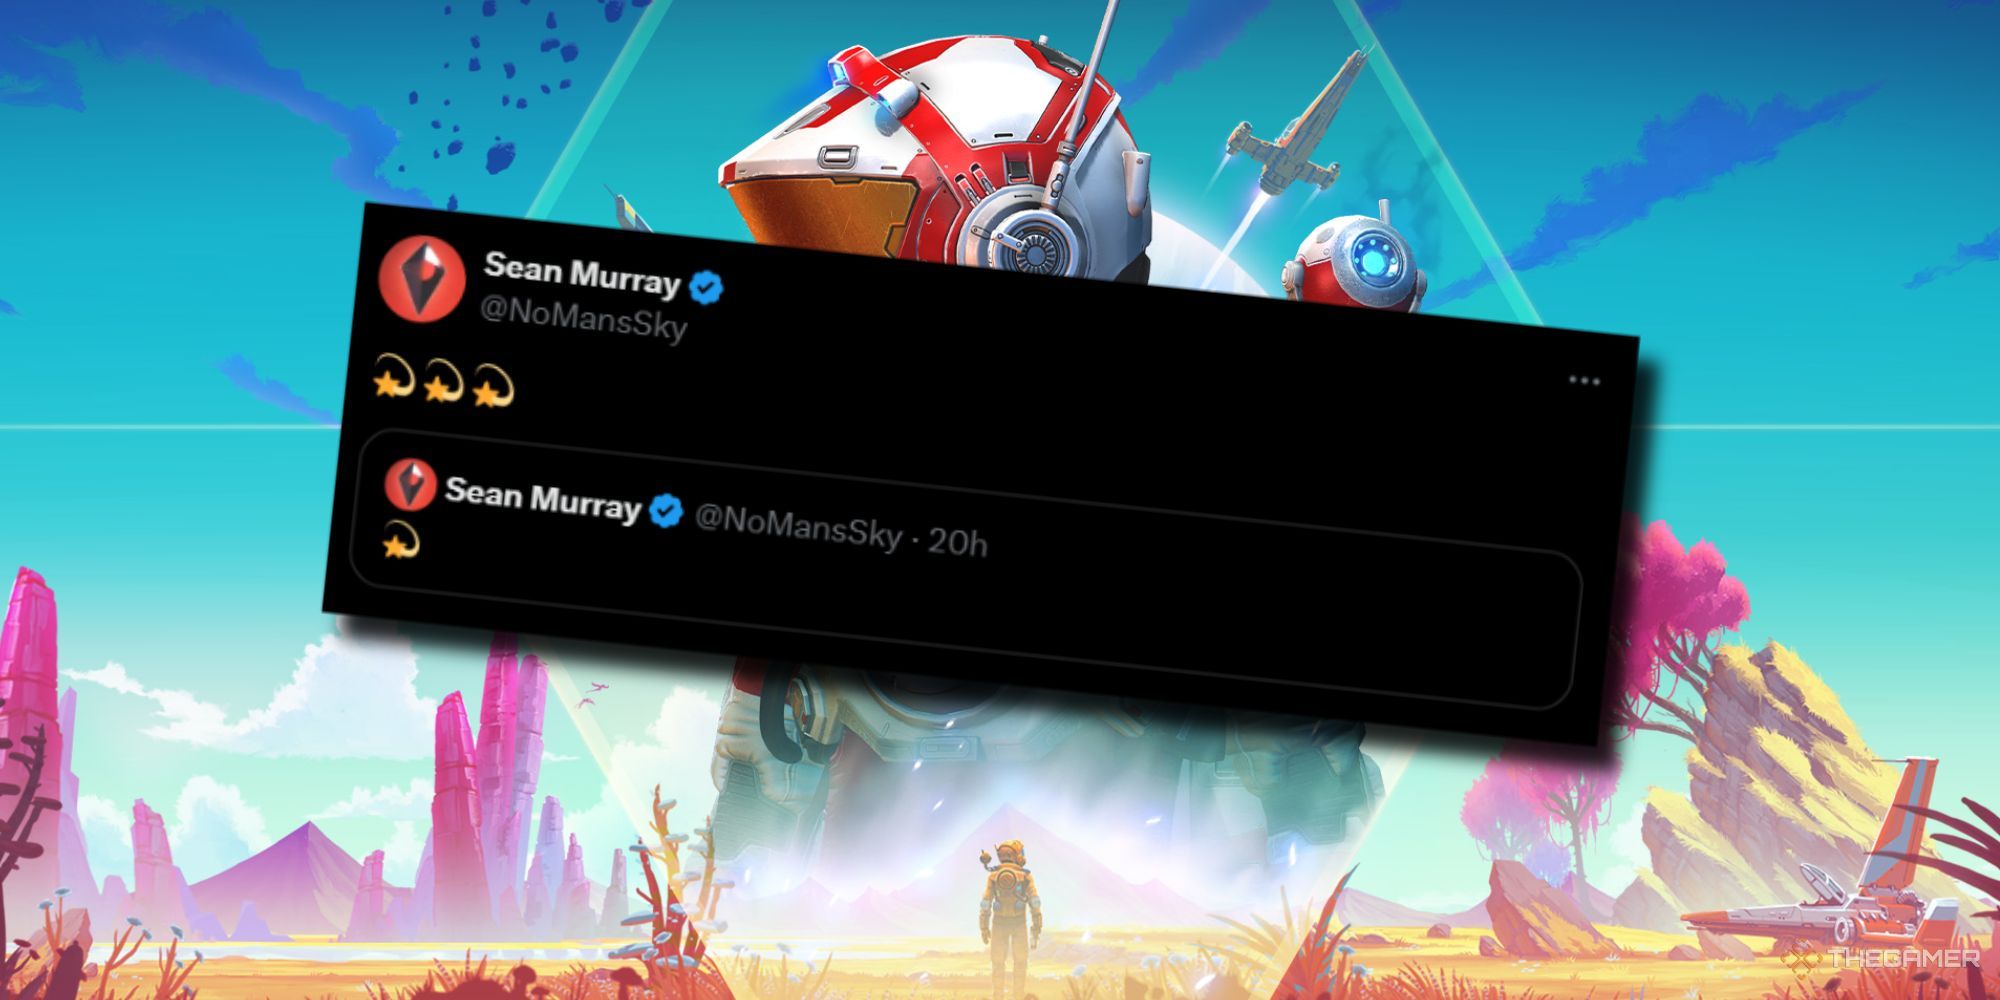 A screenshot of Sean Murray's shooting star emoji tweets over an image of No Man's Sky